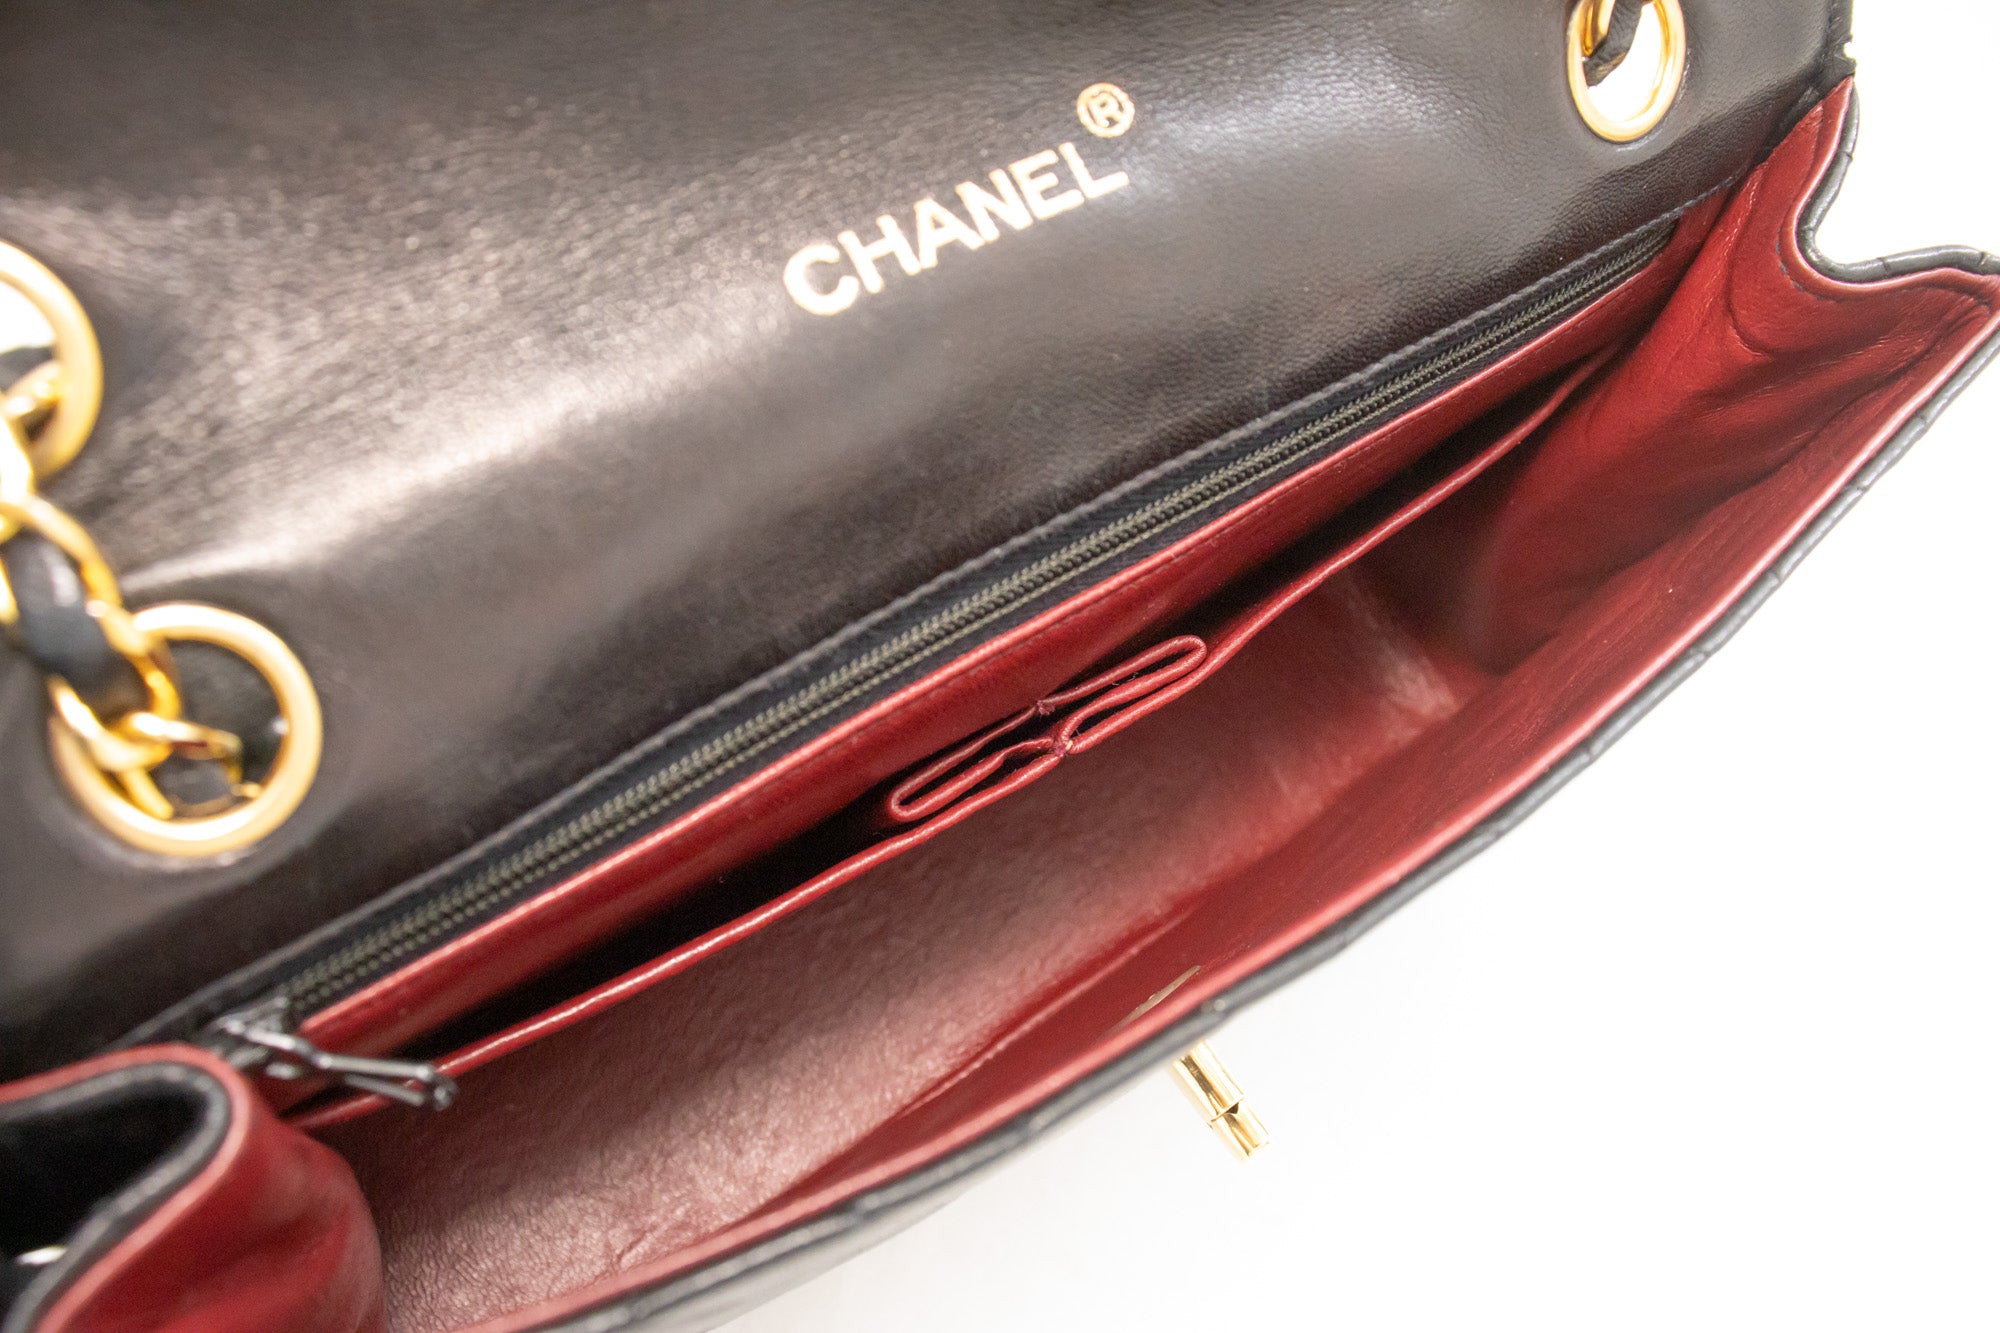 Chanel Red Half Moon Chain Shoulder Bag